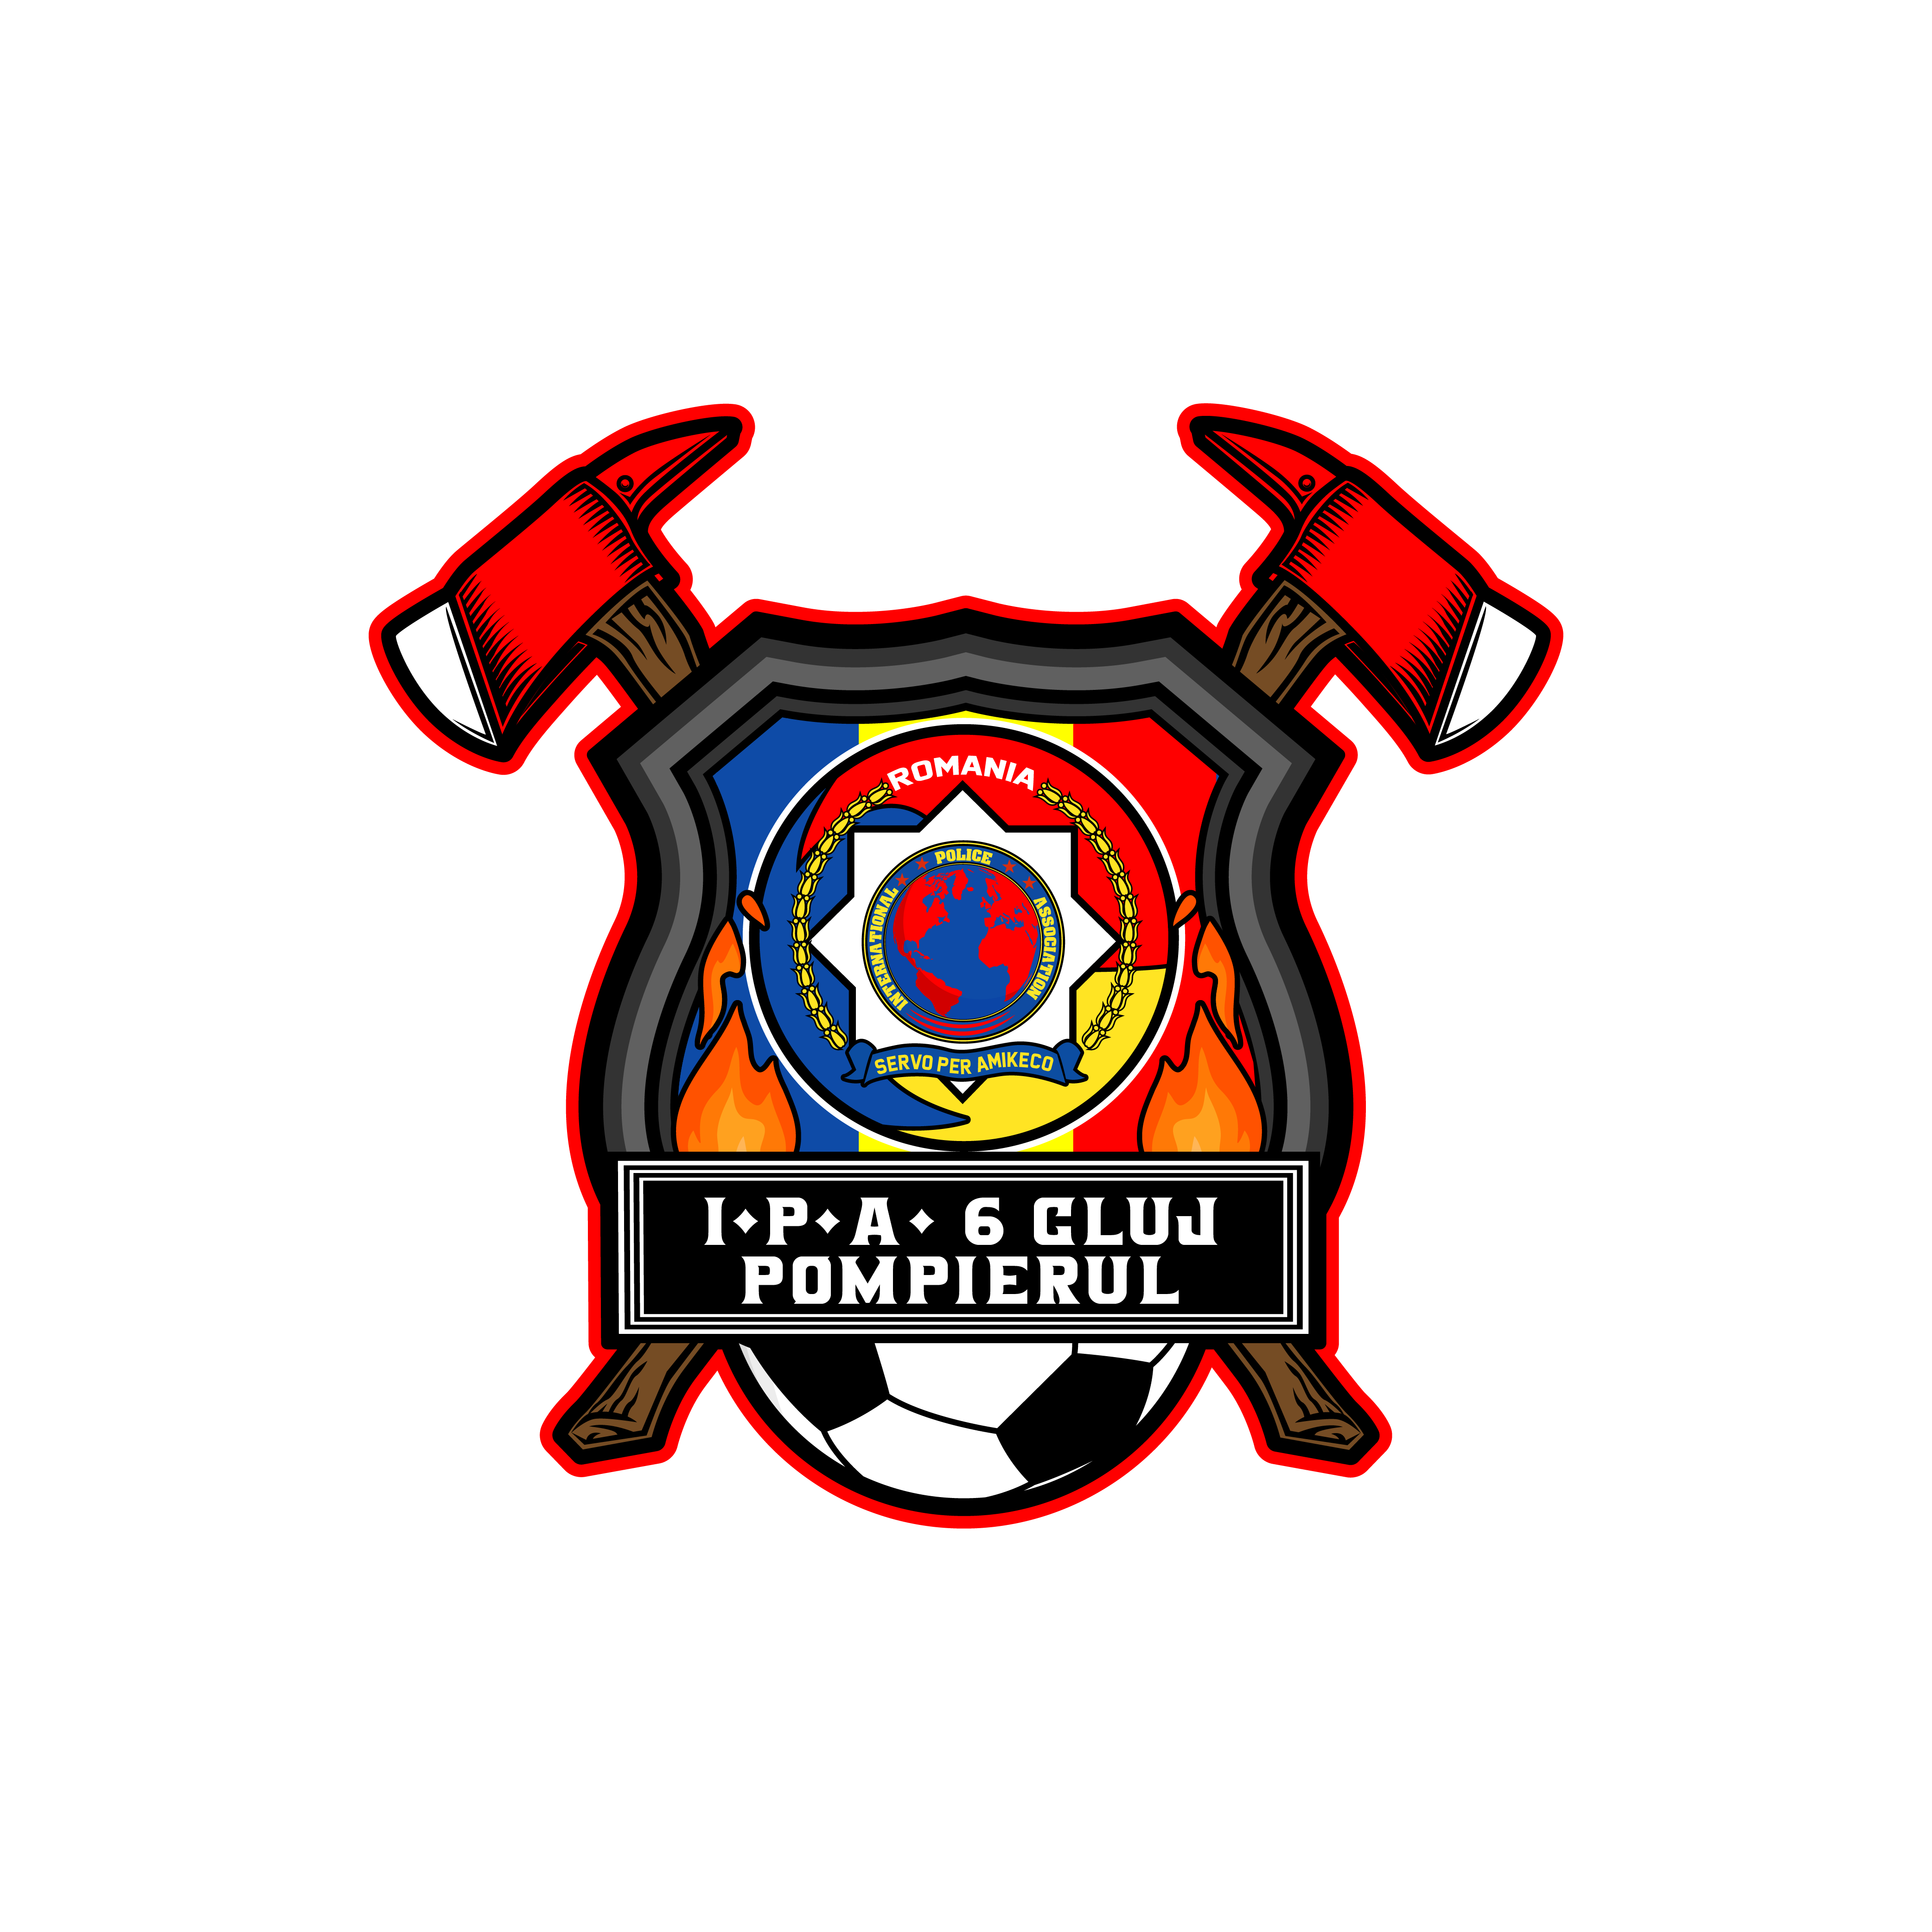 IPA 6 Cluj Pompierul